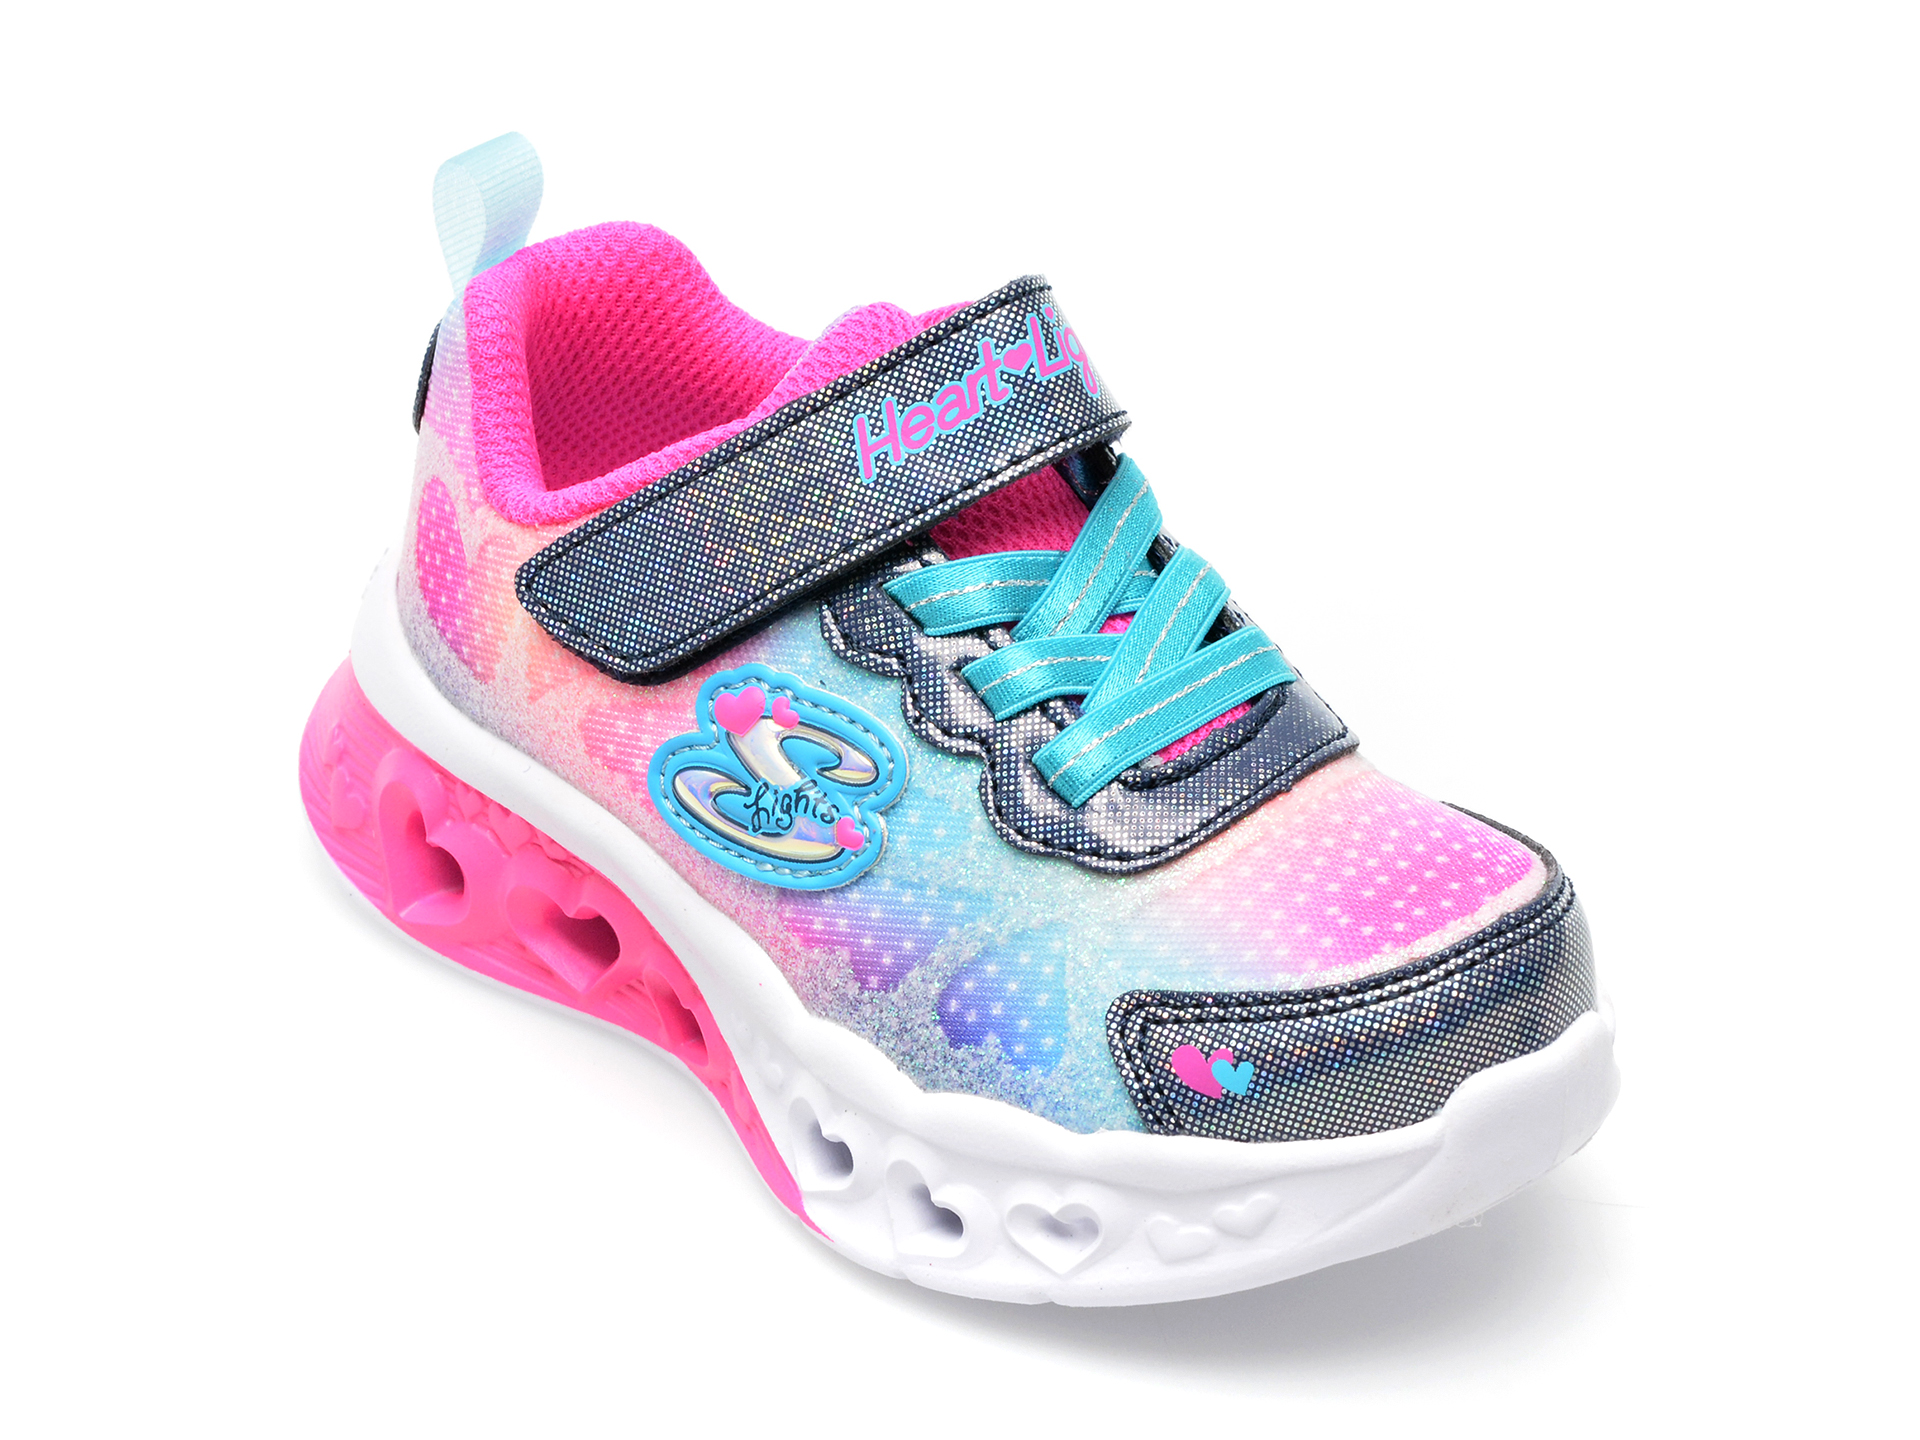 Pantofi SKECHERS multicolor, FLUTTER HEART LIGHTS, din material textil si piele ecologica /copii/incaltaminte